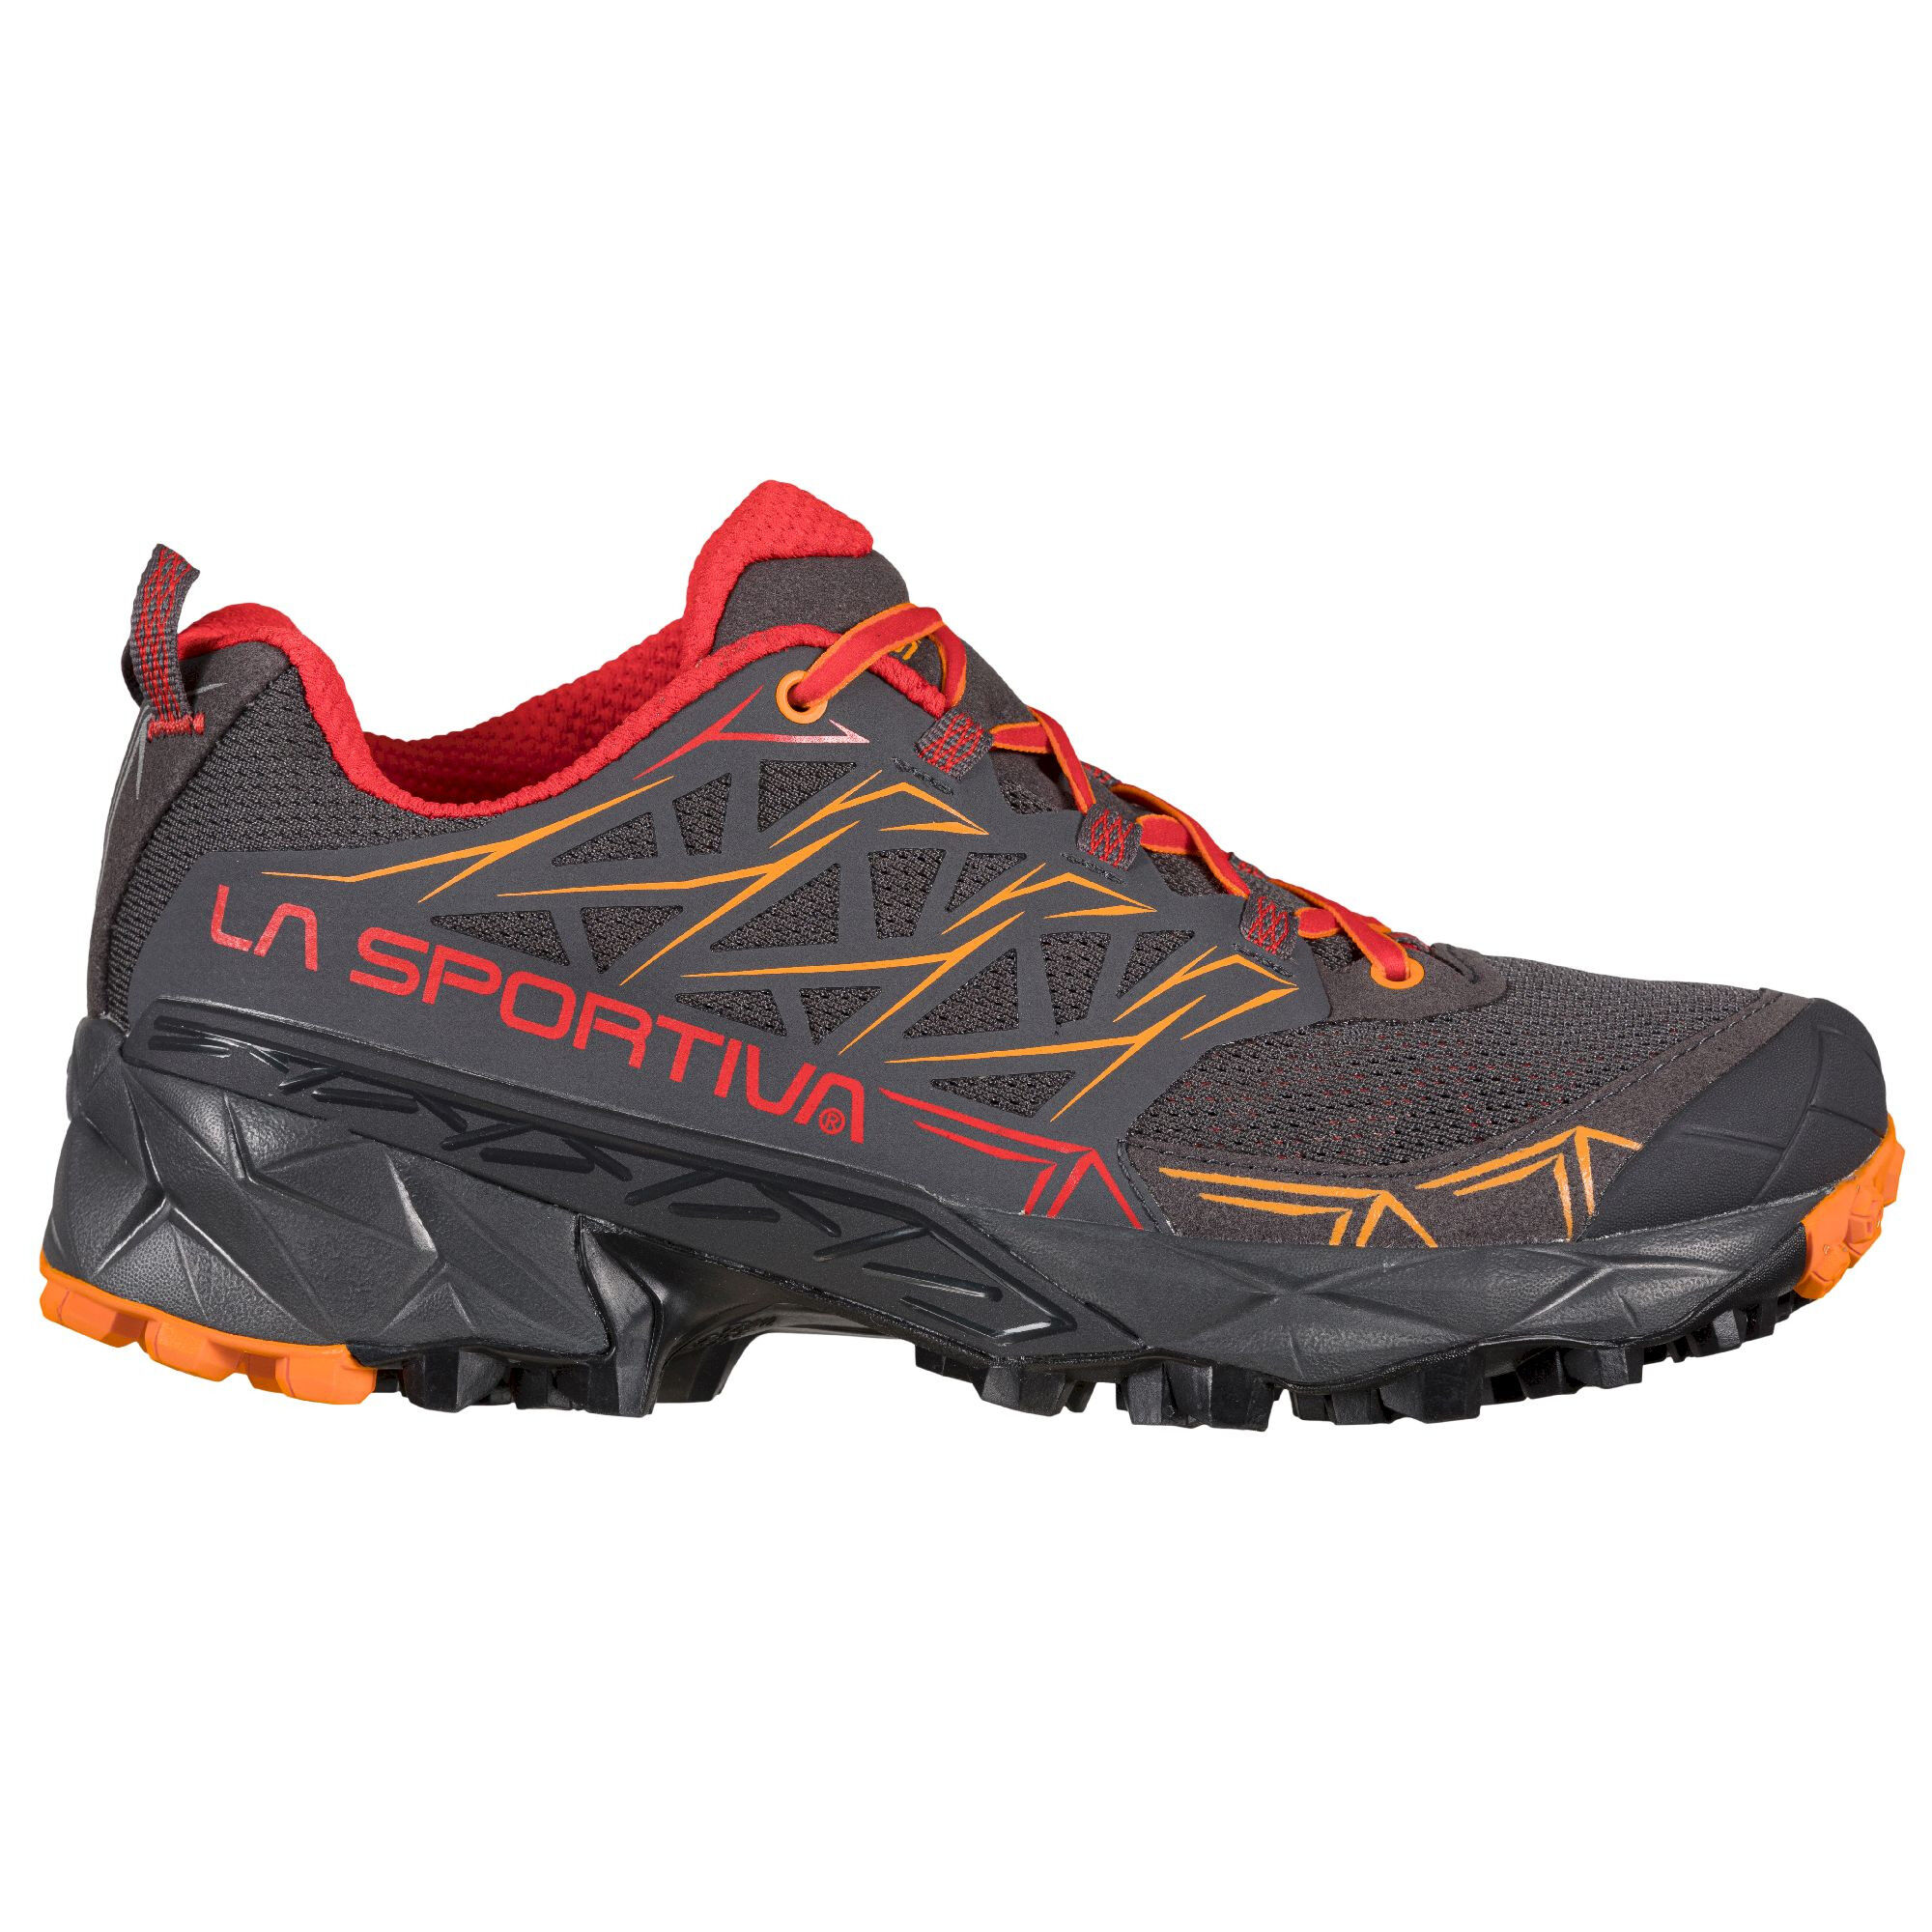 La Sportiva - Akyra - Trail running shoes - Women's